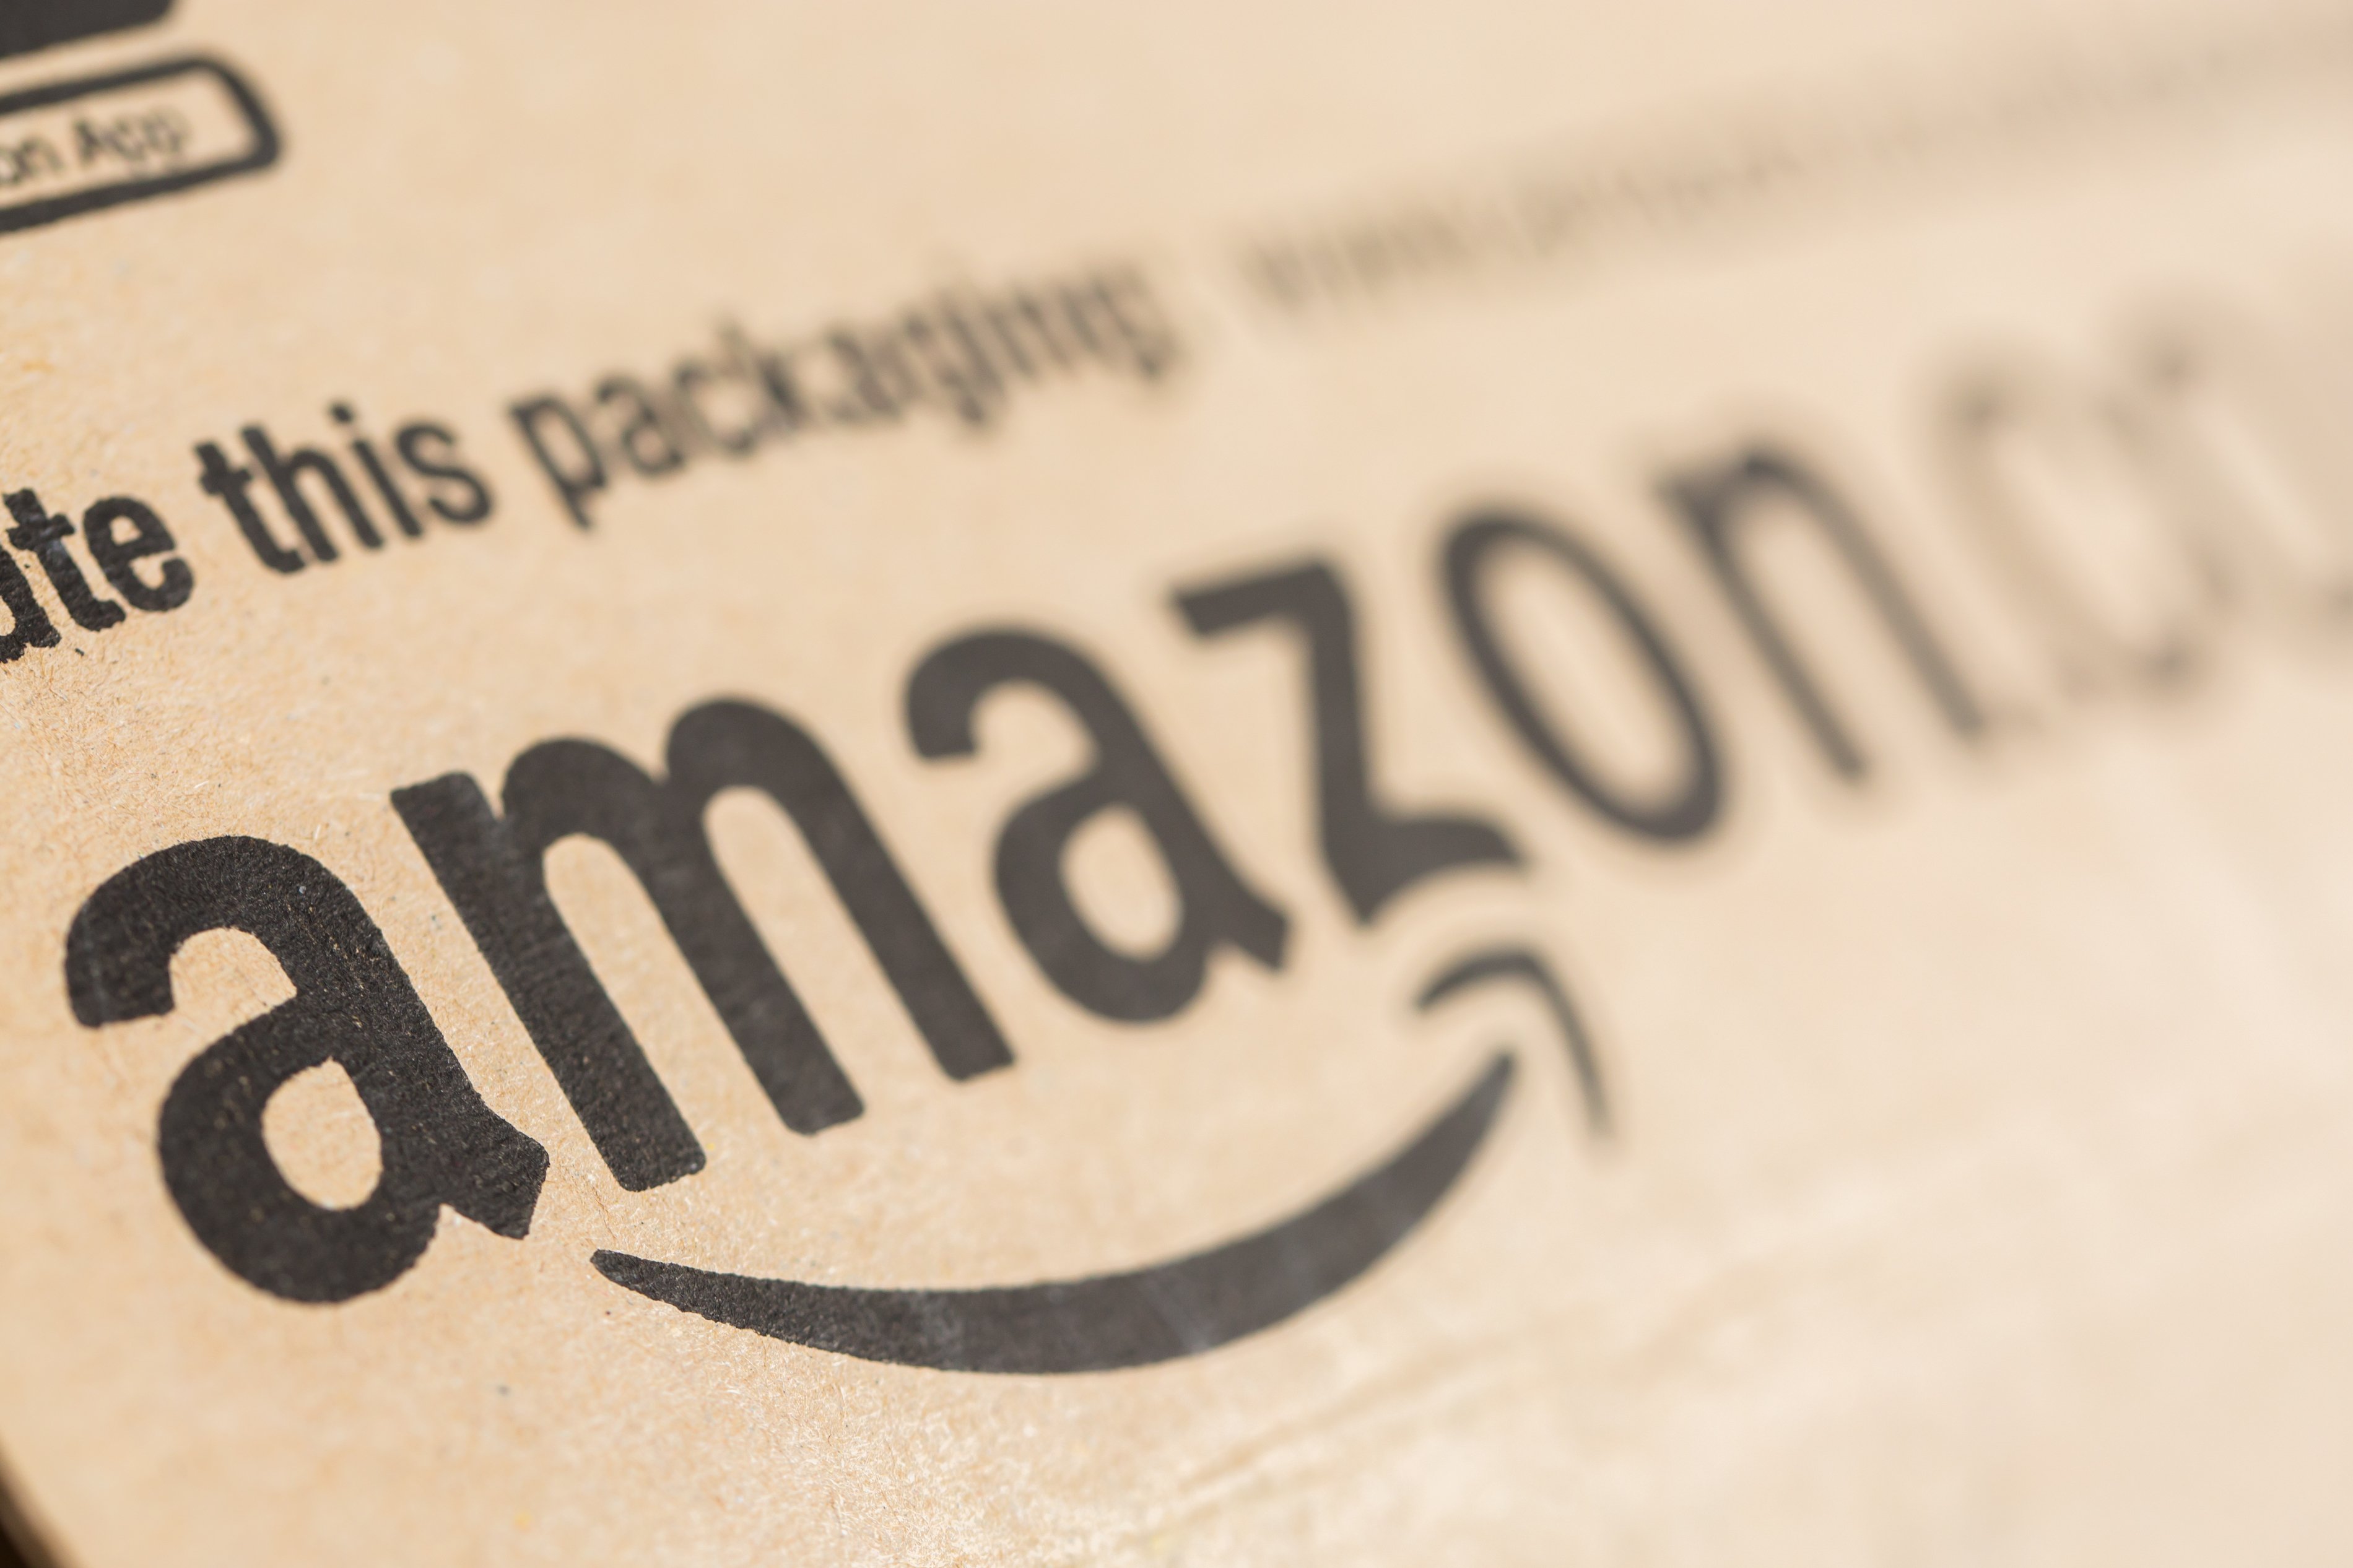 An Amazon logo on a box